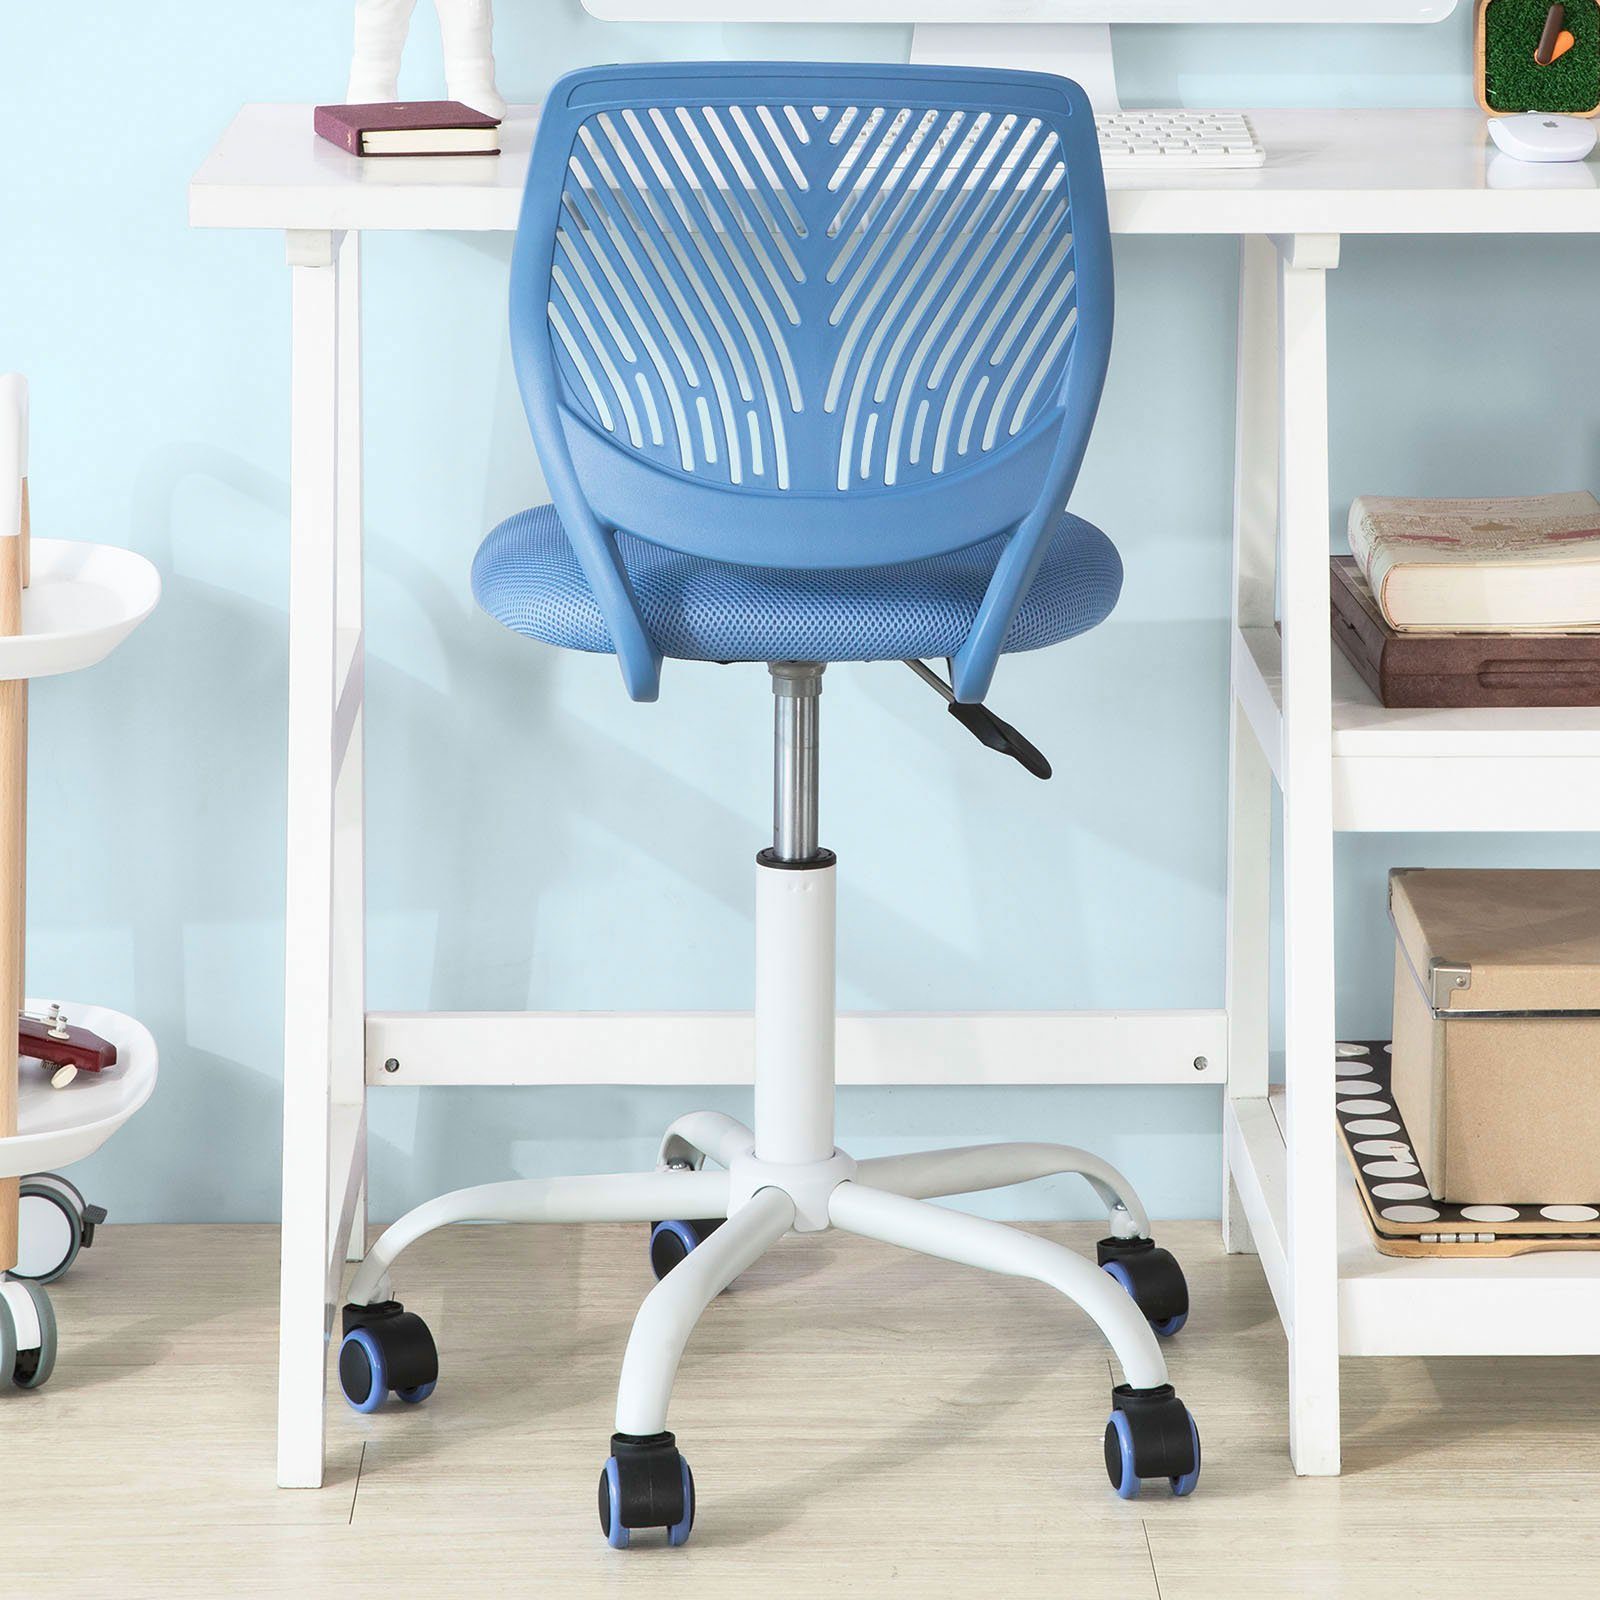 Bürostuhl blau SoBuy FST64, Schreibtischstuhl Drehstuhl höhenverstellbar Rücklehne Jugenddrehstuhl mit